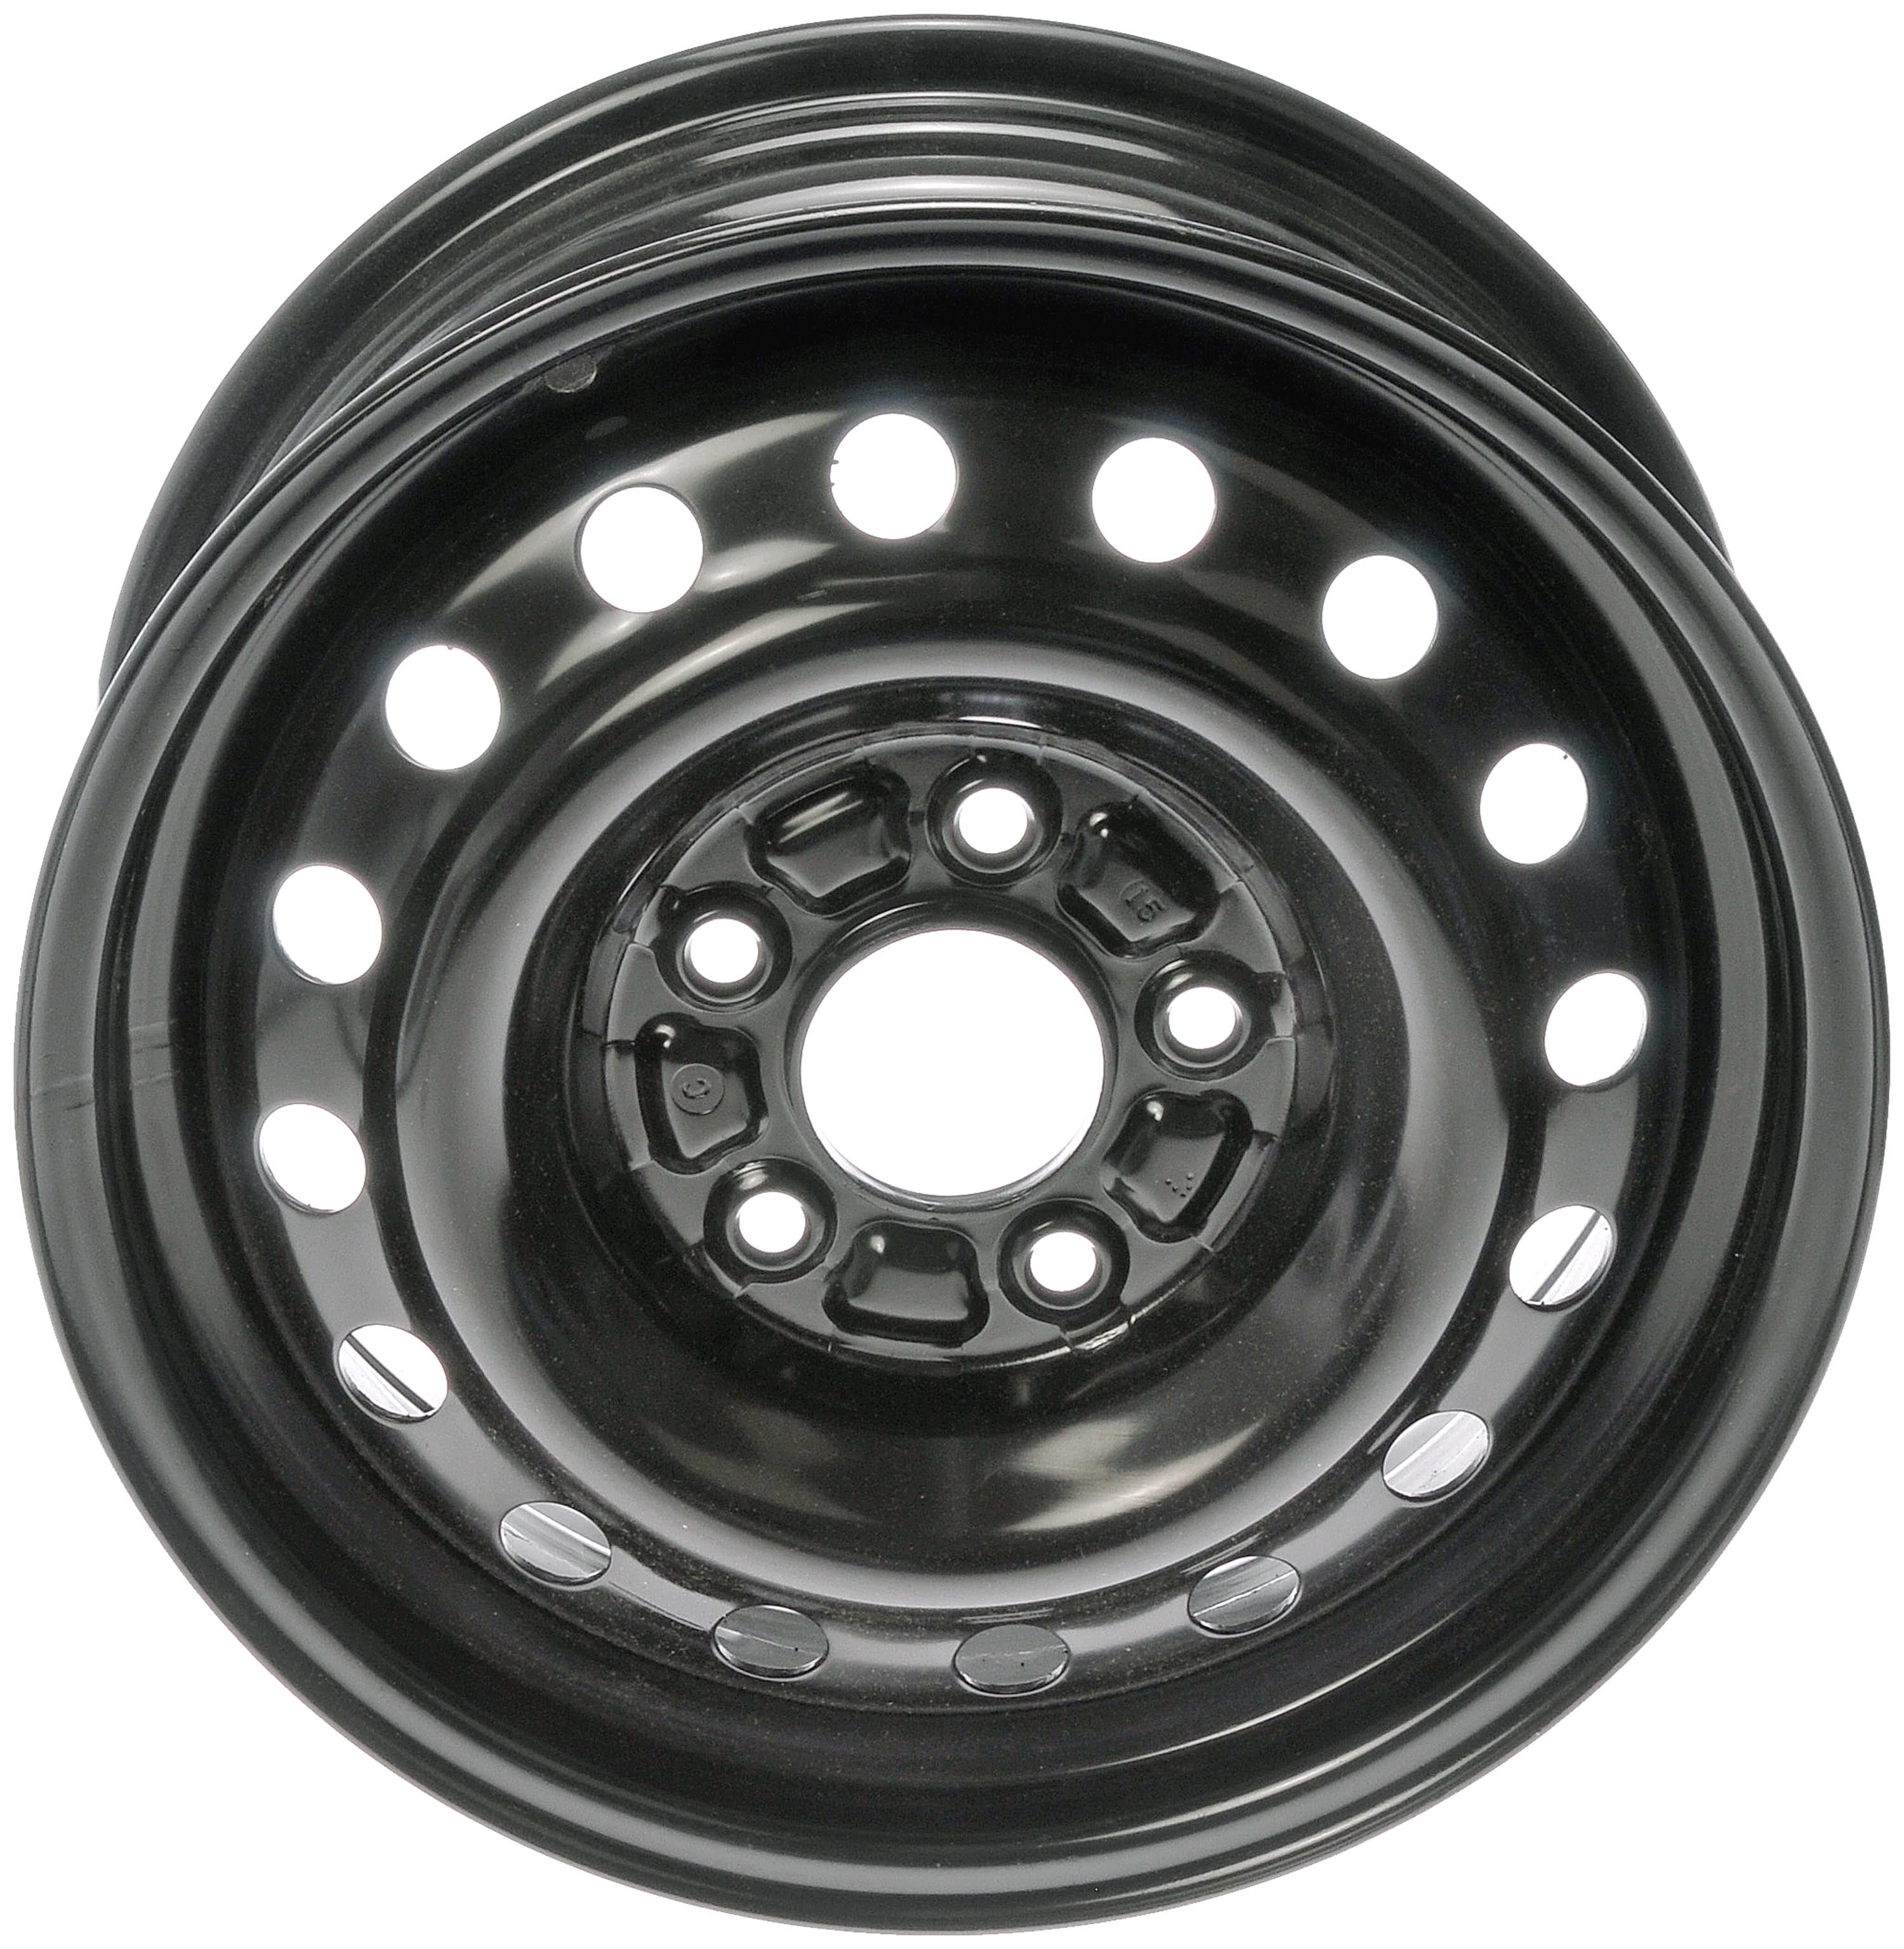 Dorman 939-196 Wheel for Specific Hyundai / Kia Models, Black